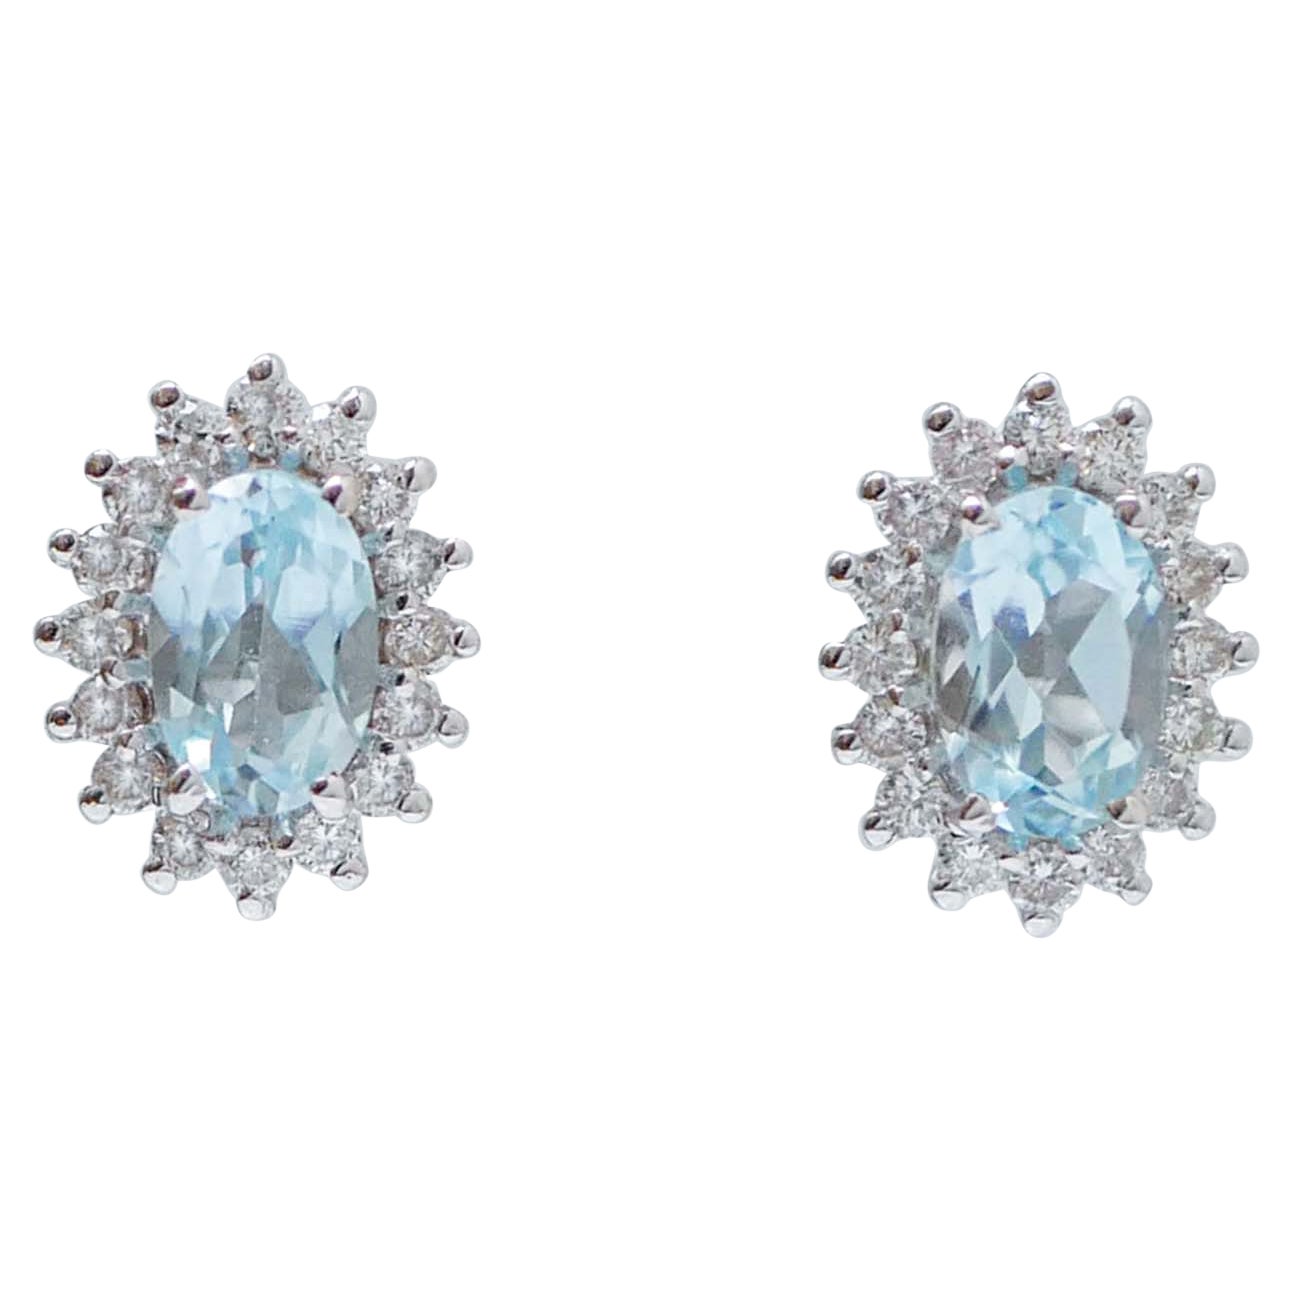 Aquamarine Colour Topaz, Diamonds, 18 Karat White Gold Earrings.